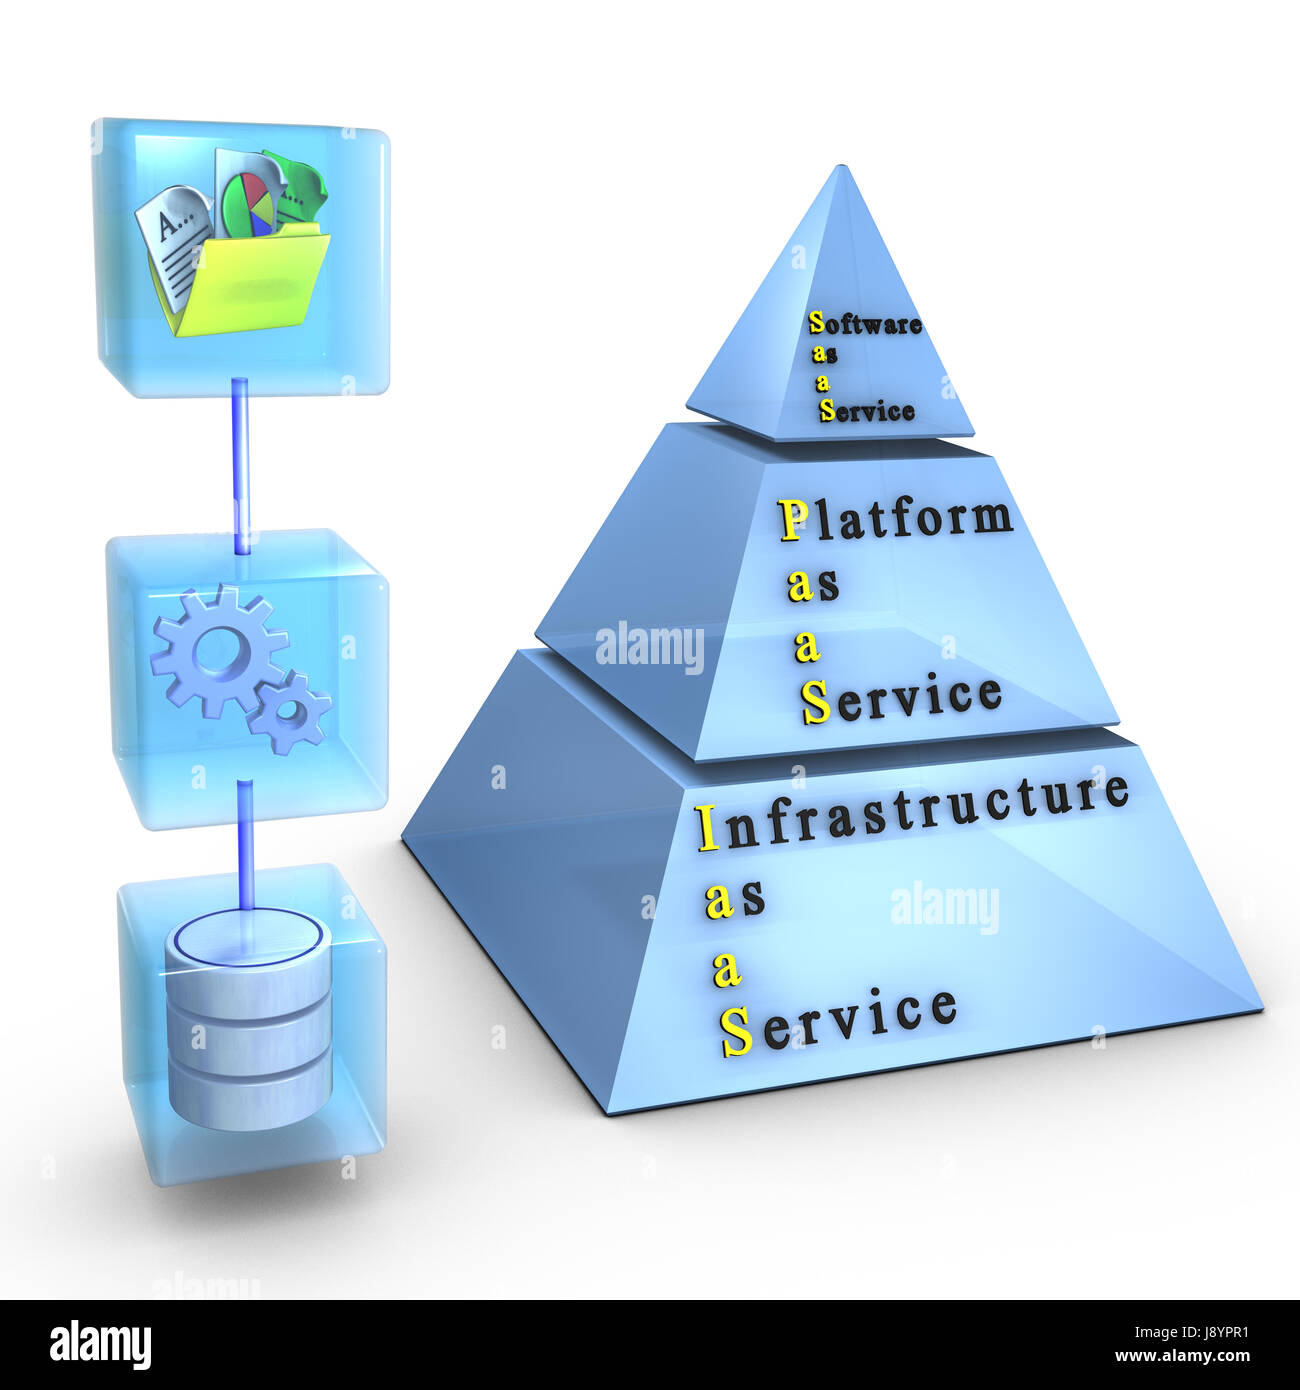 application, platform, infrastructure, layers, software, dais, service  Stock Photo - Alamy